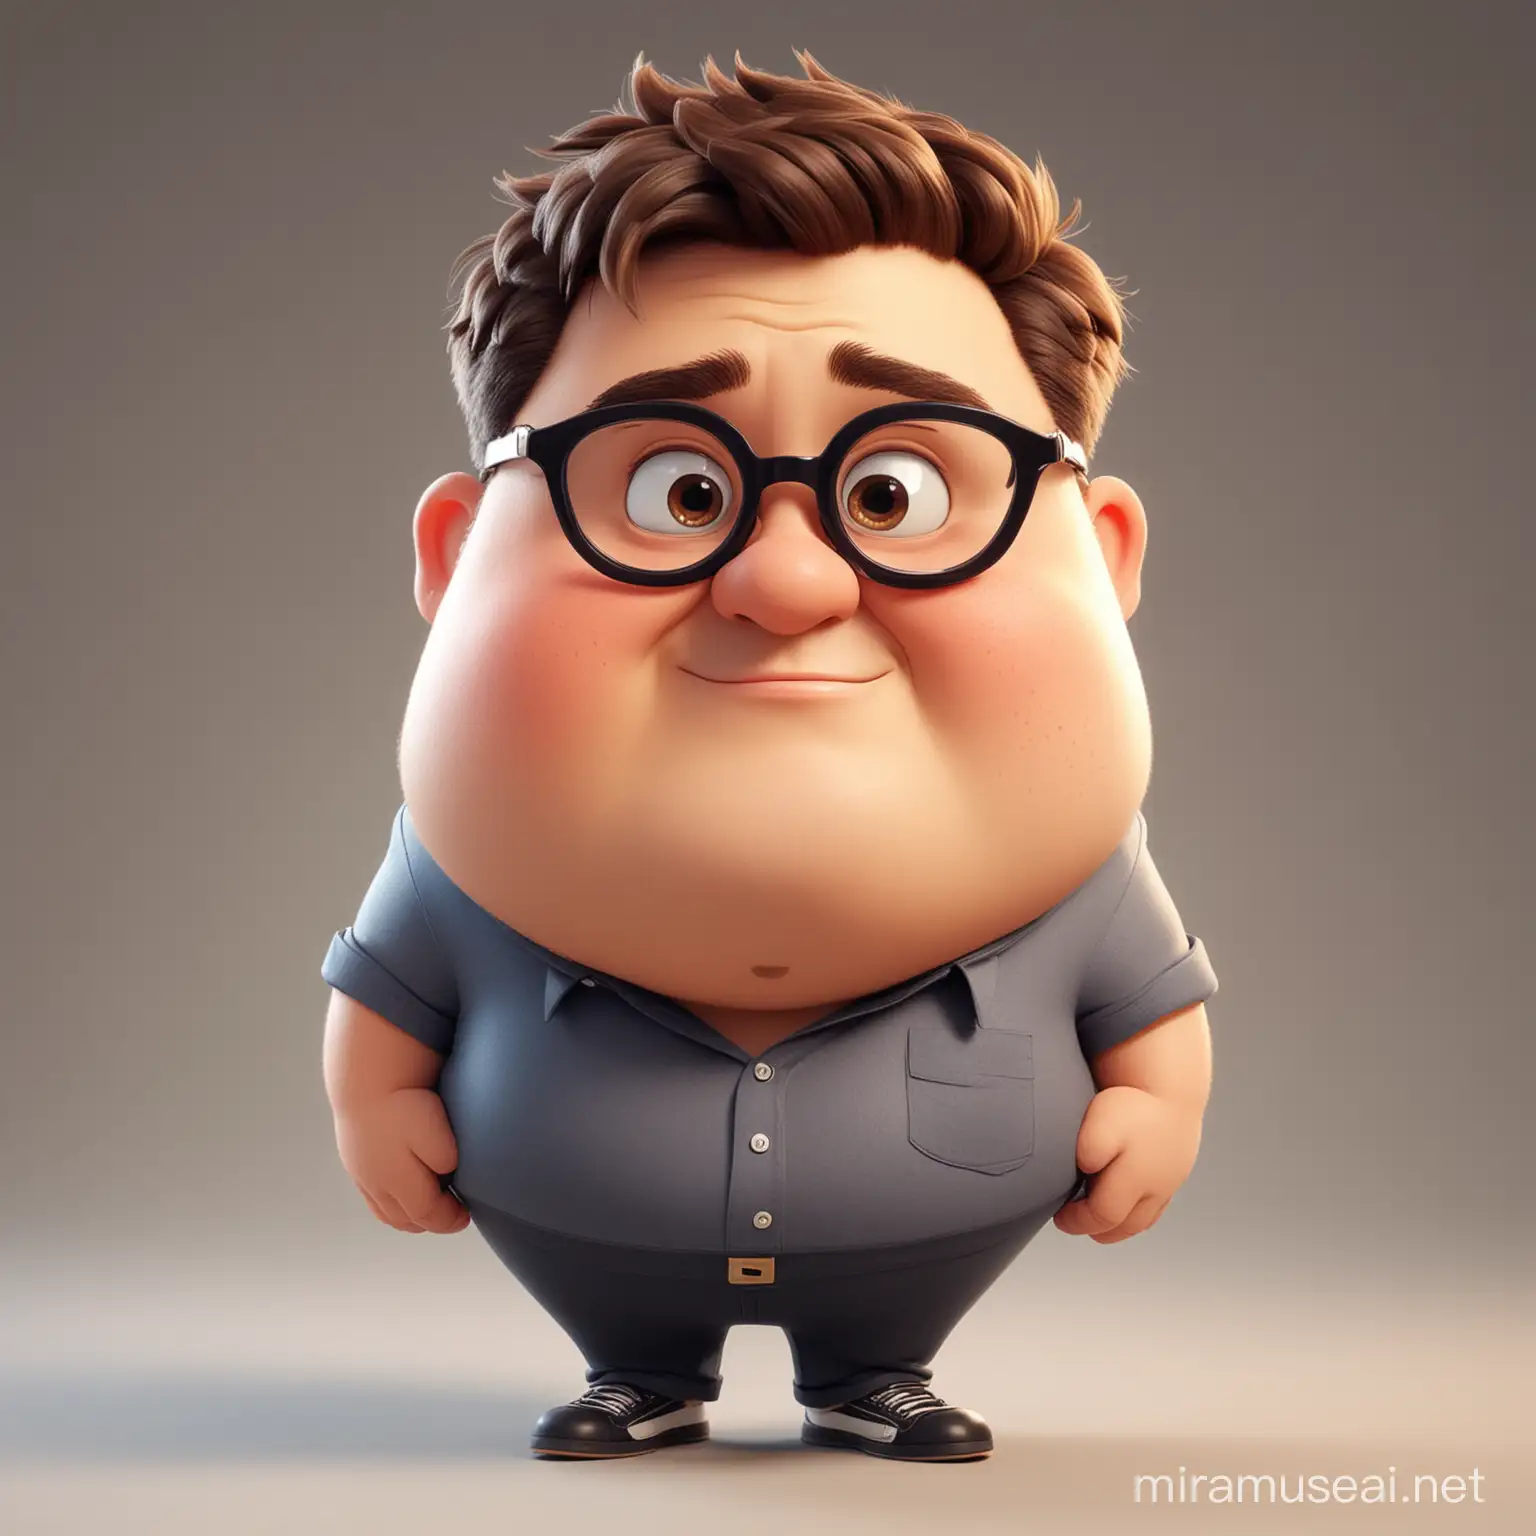 cartoon like short chubby guy with glasses
